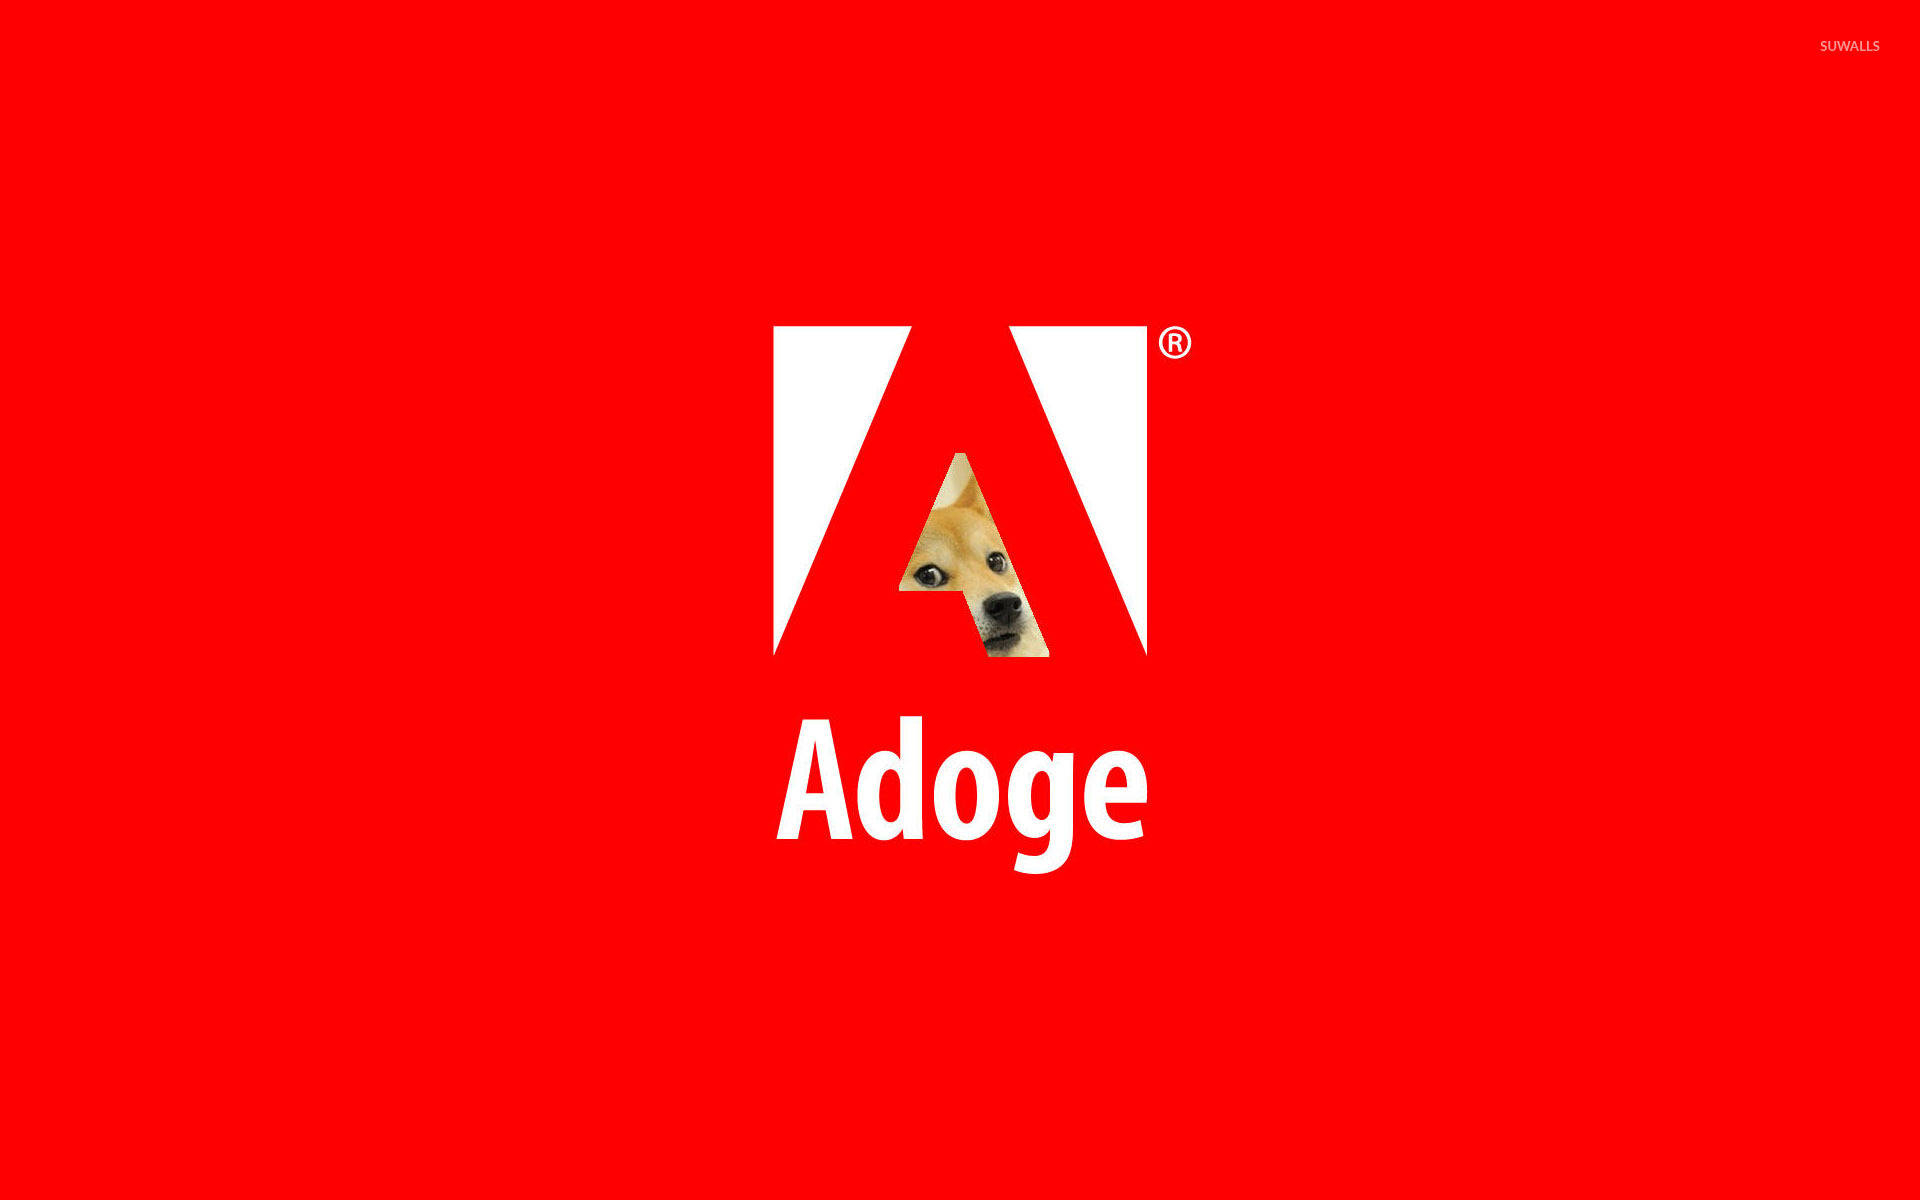 Adoge Adobe Doge meme wallpaper.